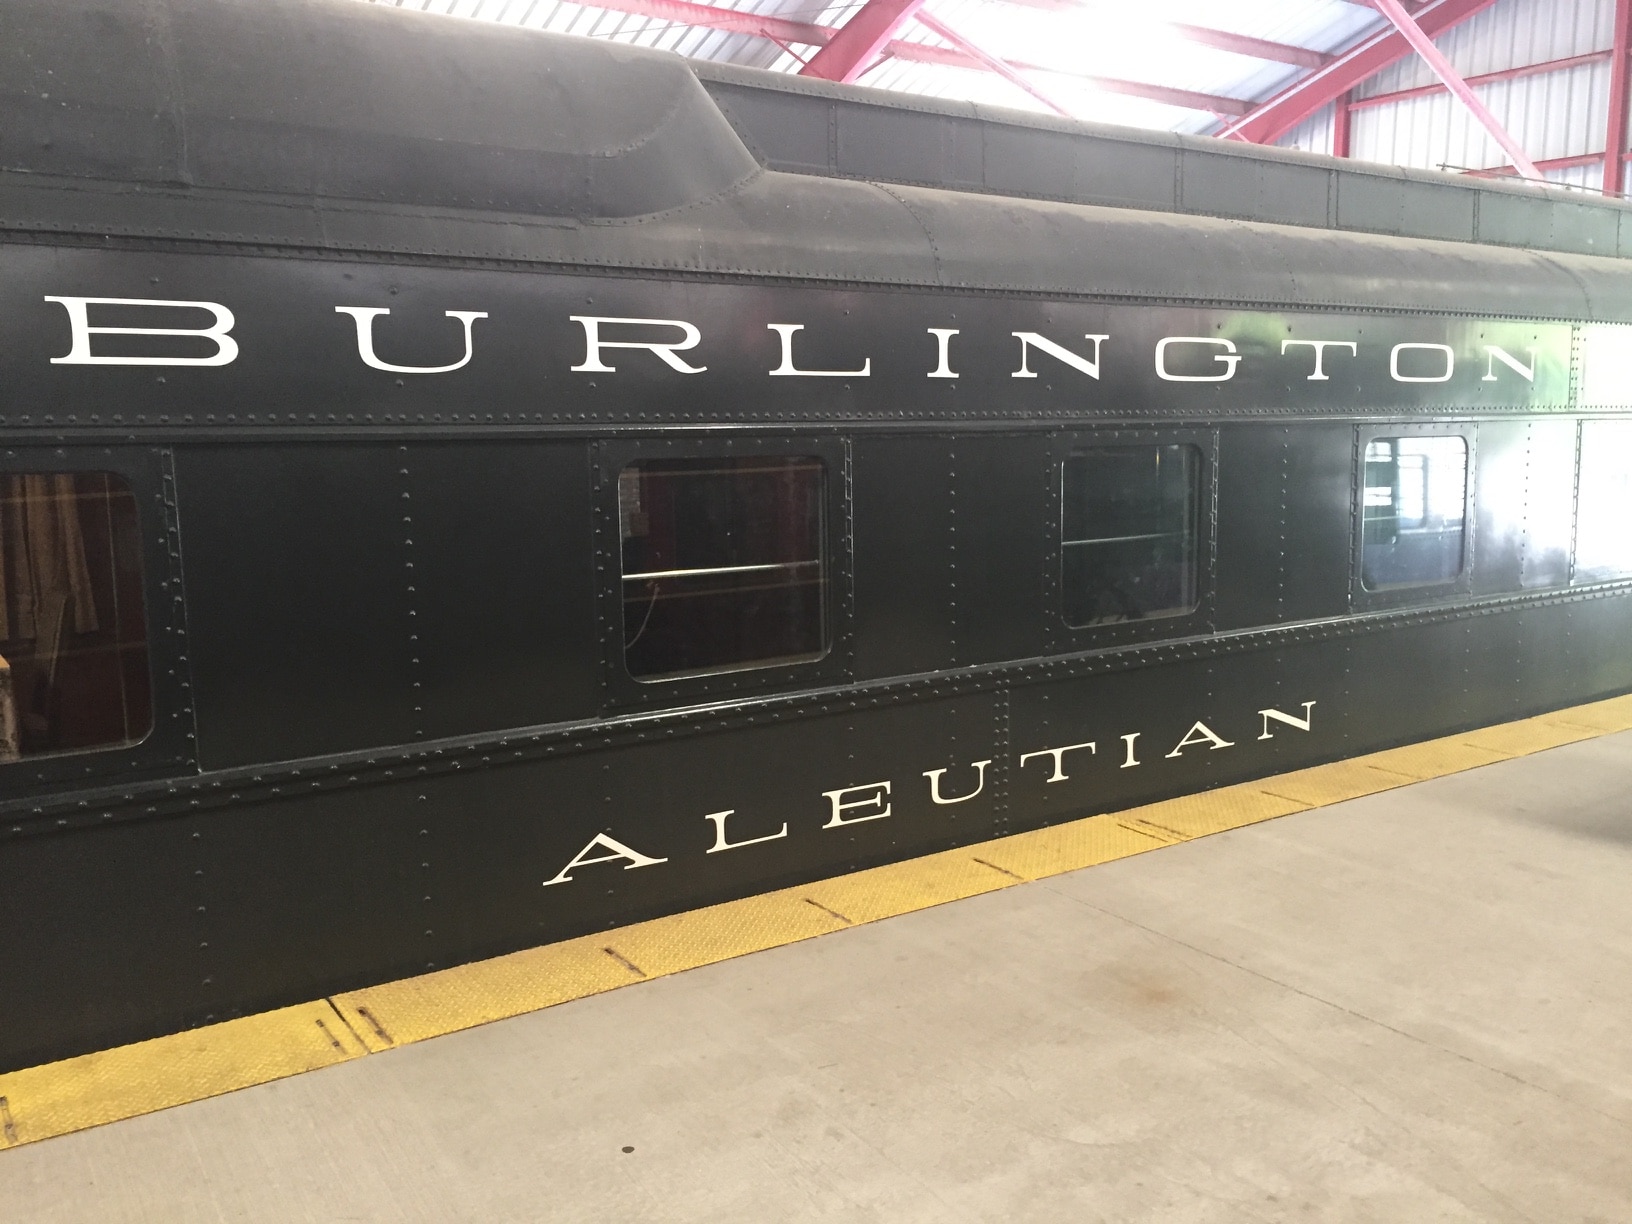 Burlington Aleutian Train Car